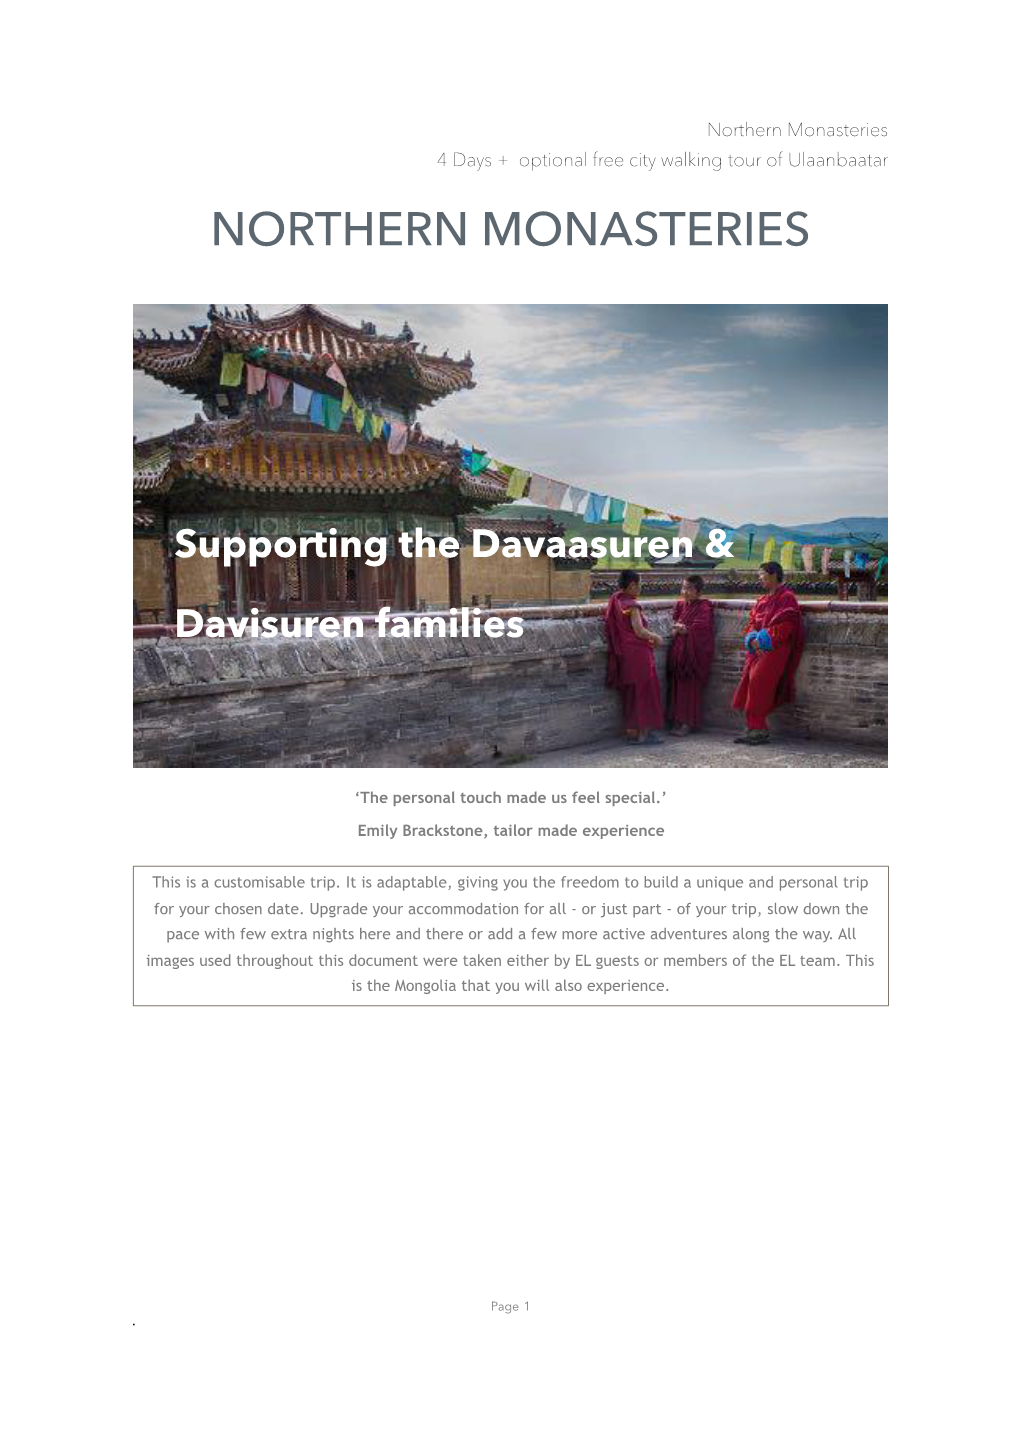 Northern Monasteries 4 Days + Optional Free City Walking Tour of Ulaanbaatar NORTHERN MONASTERIES